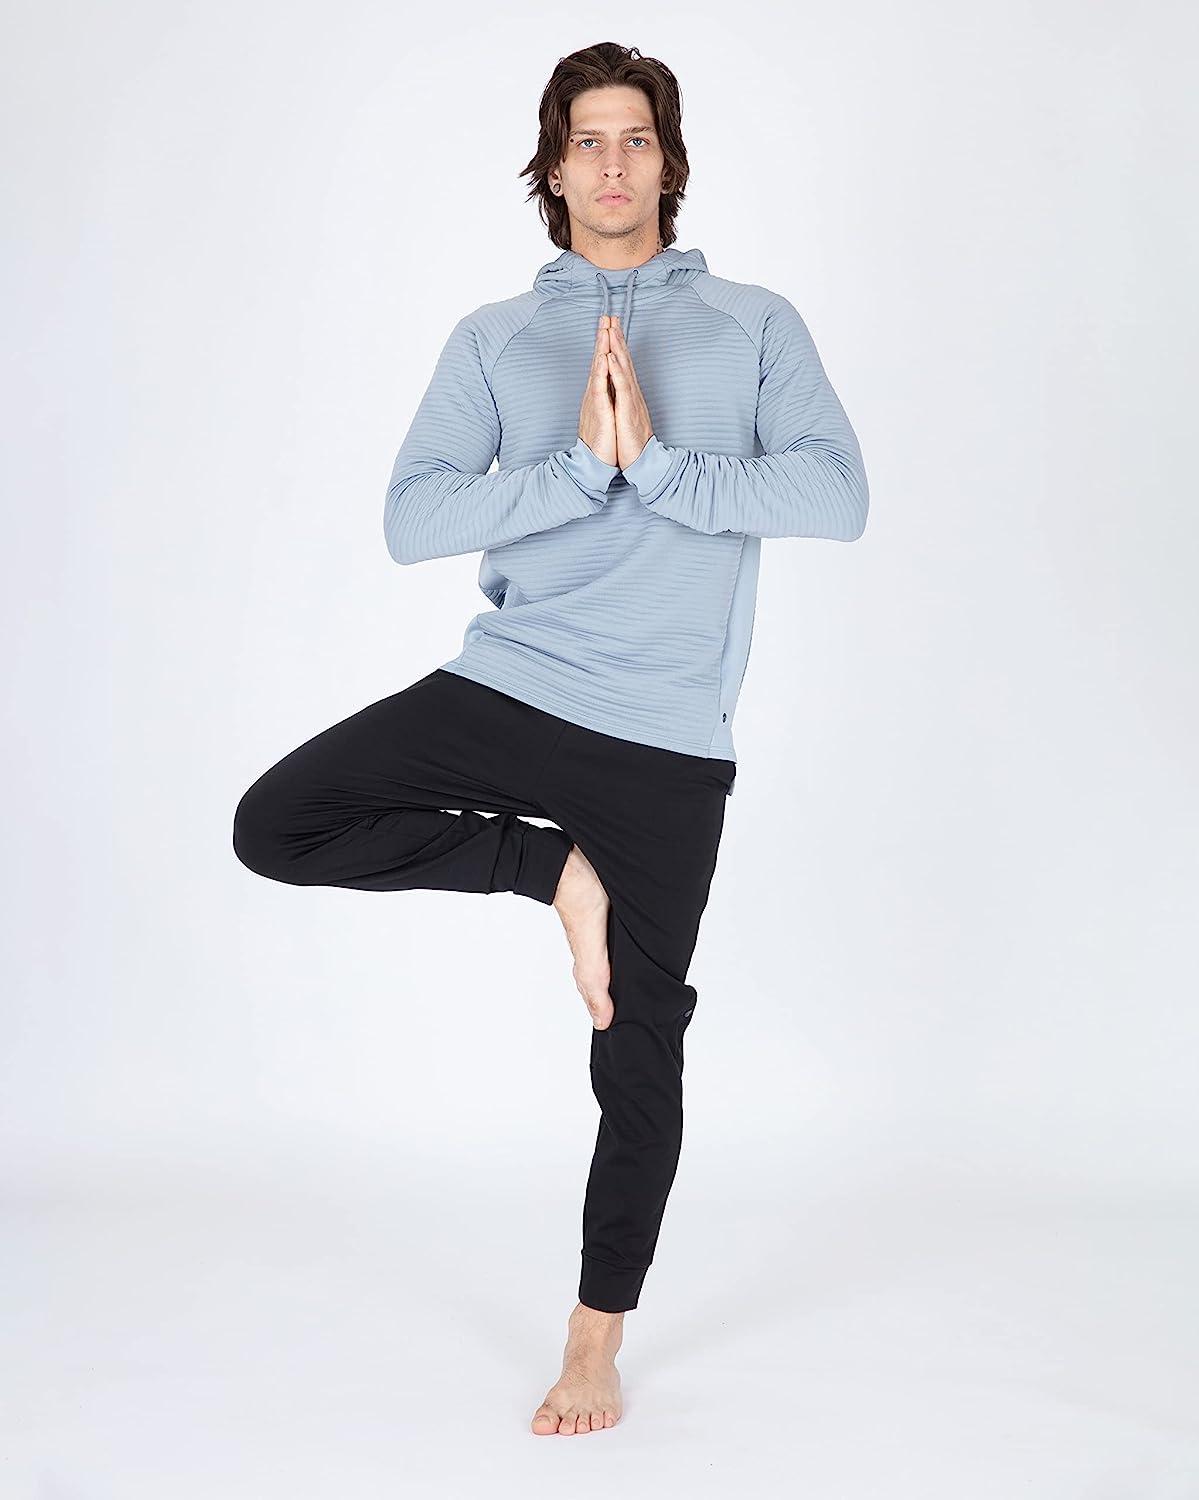 Apana Teal Extended Waistband Side Pokets Yoga Pants